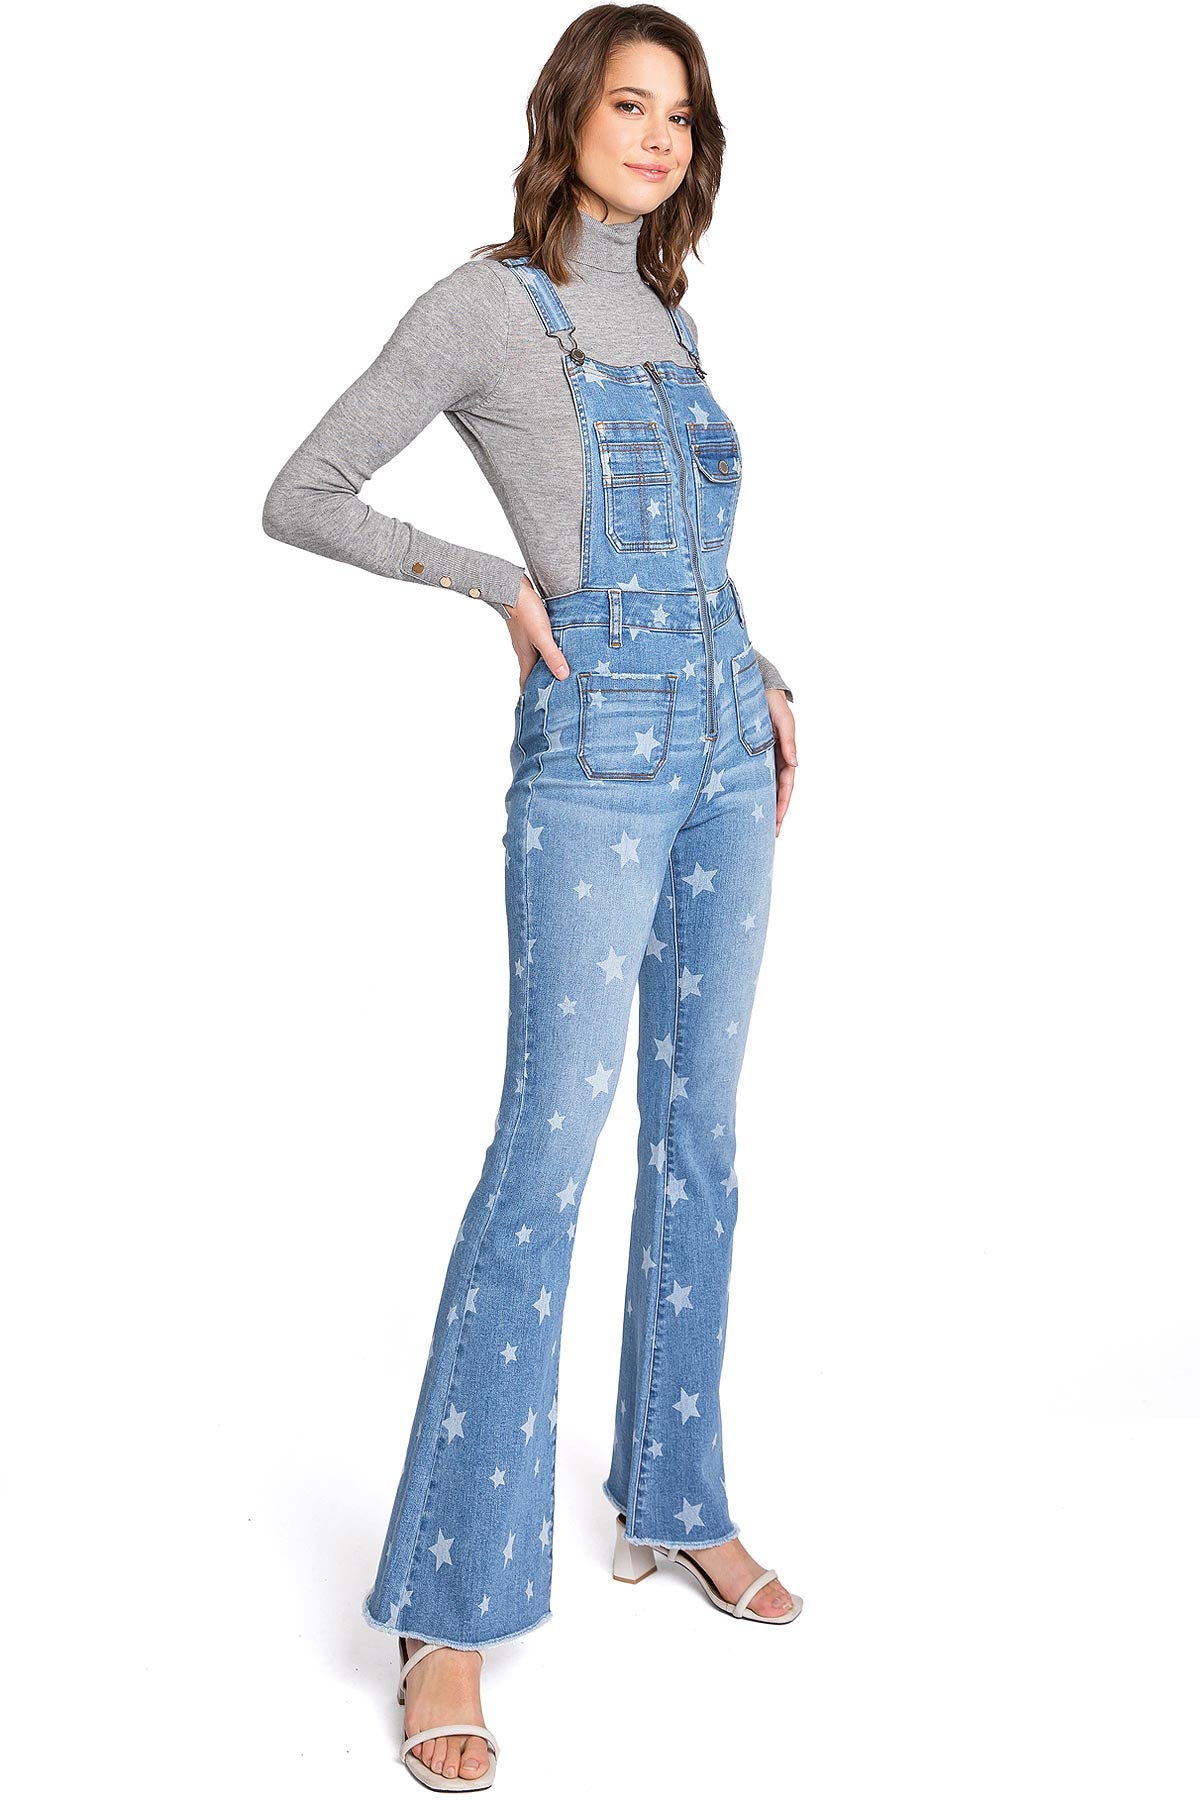 Lana Roux Star Print Zipper Denim Flare Overalls